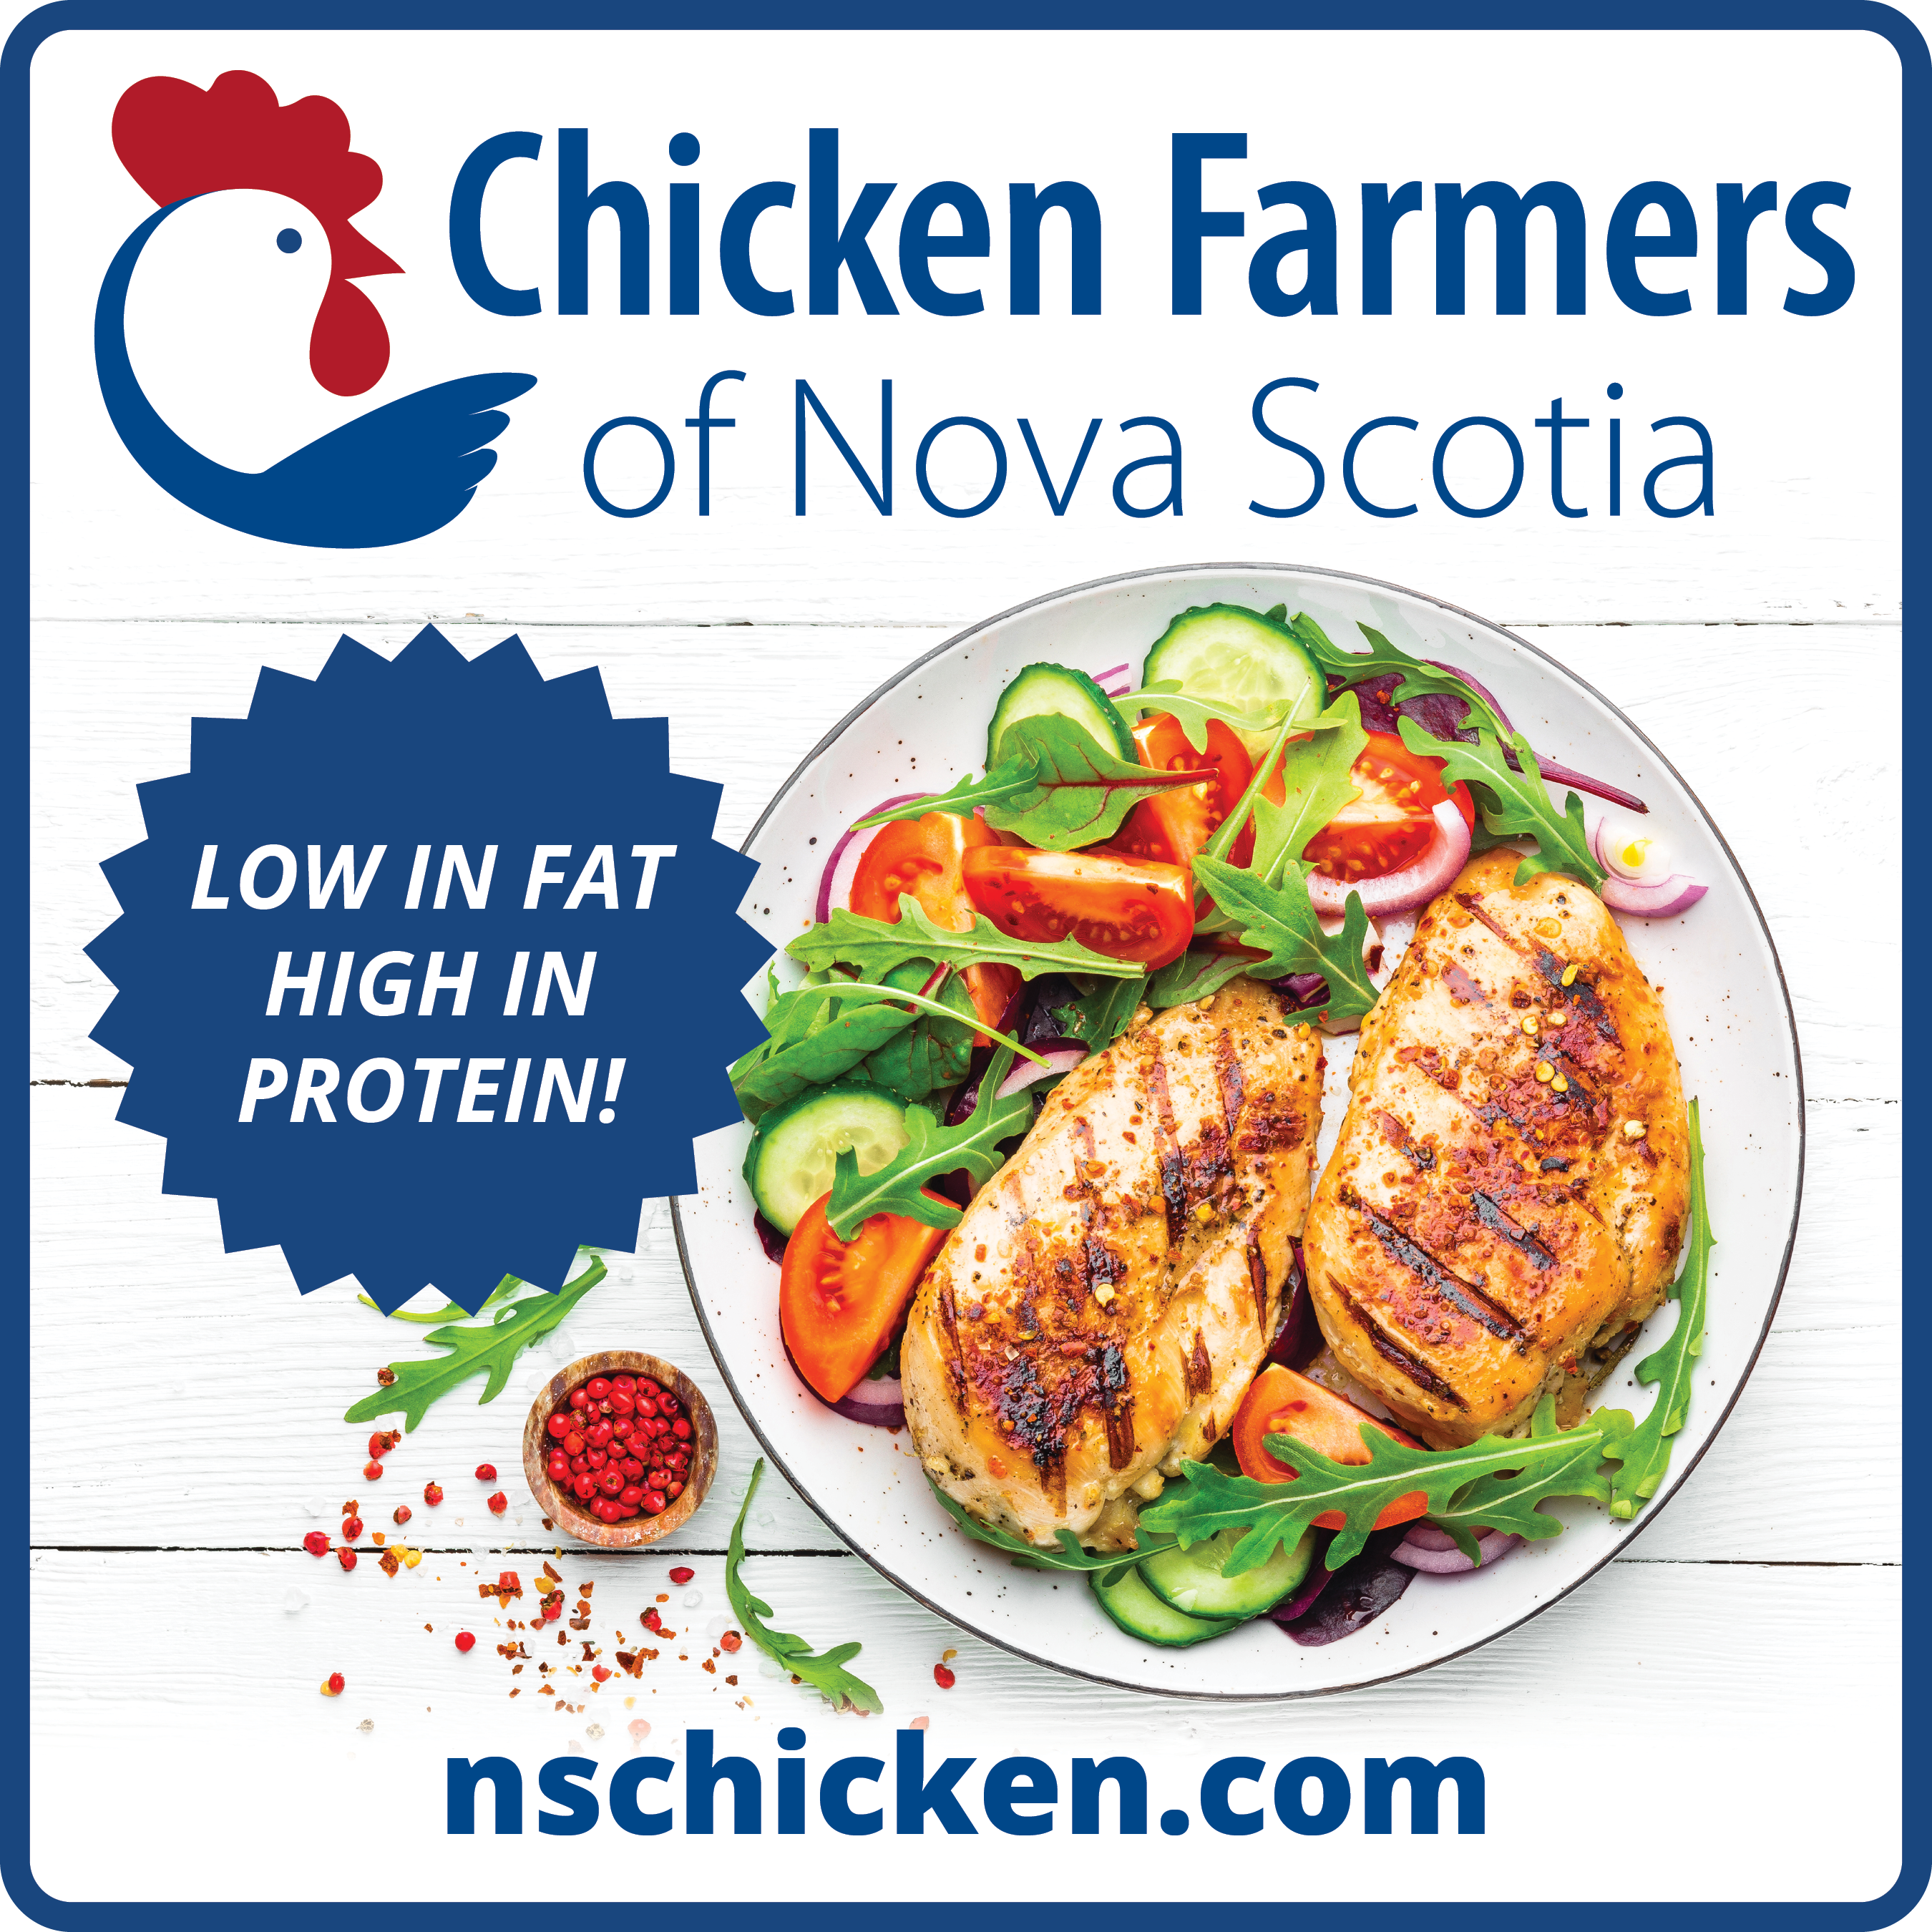 The Chicken Farmers of Nova Scotia